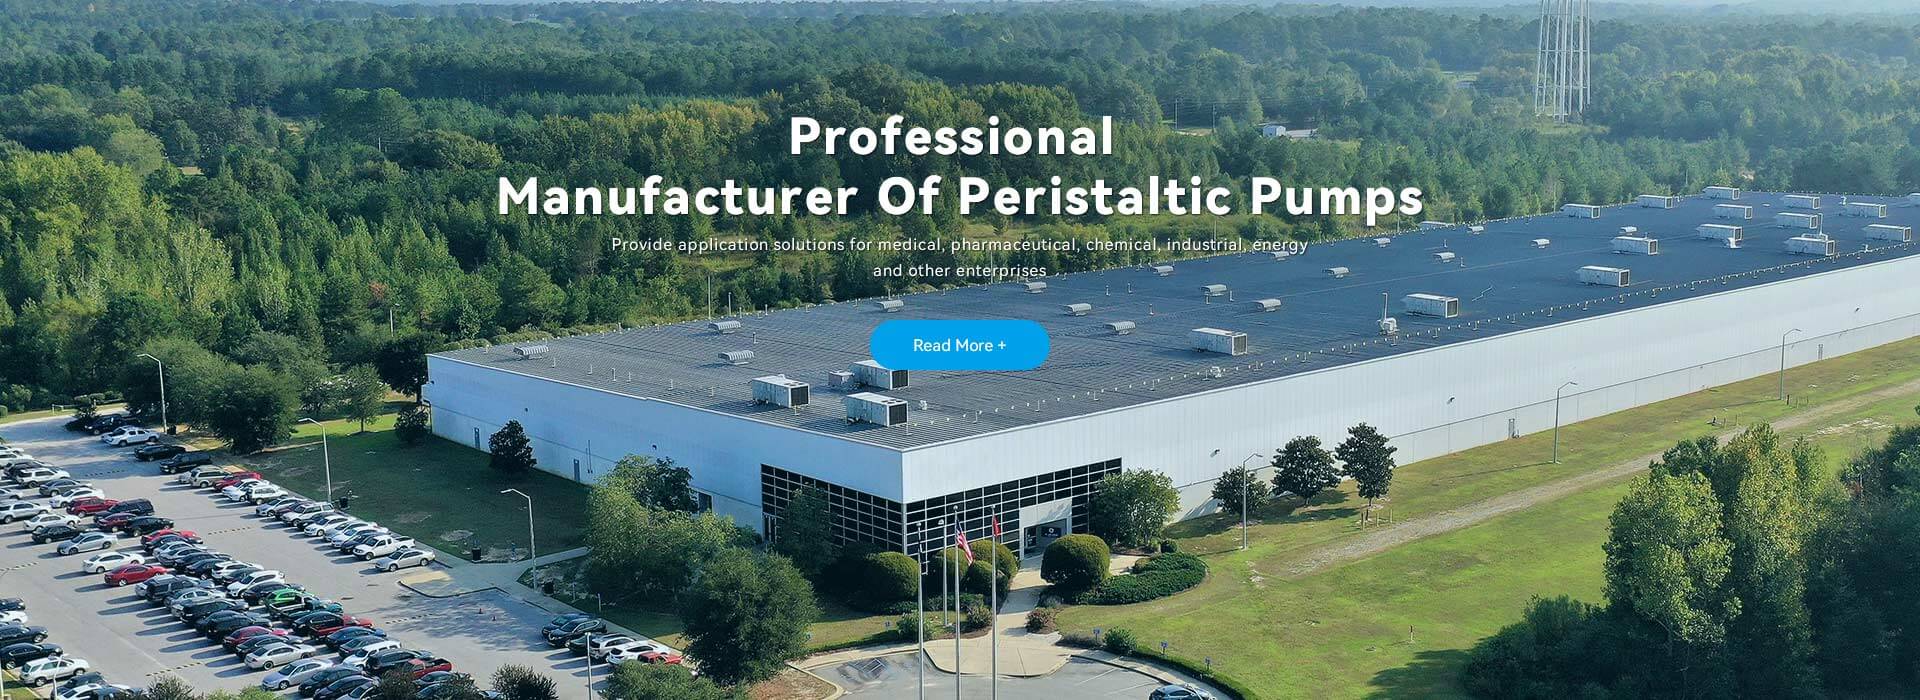 Professional Manufacturer Of Peristaltic Pumps